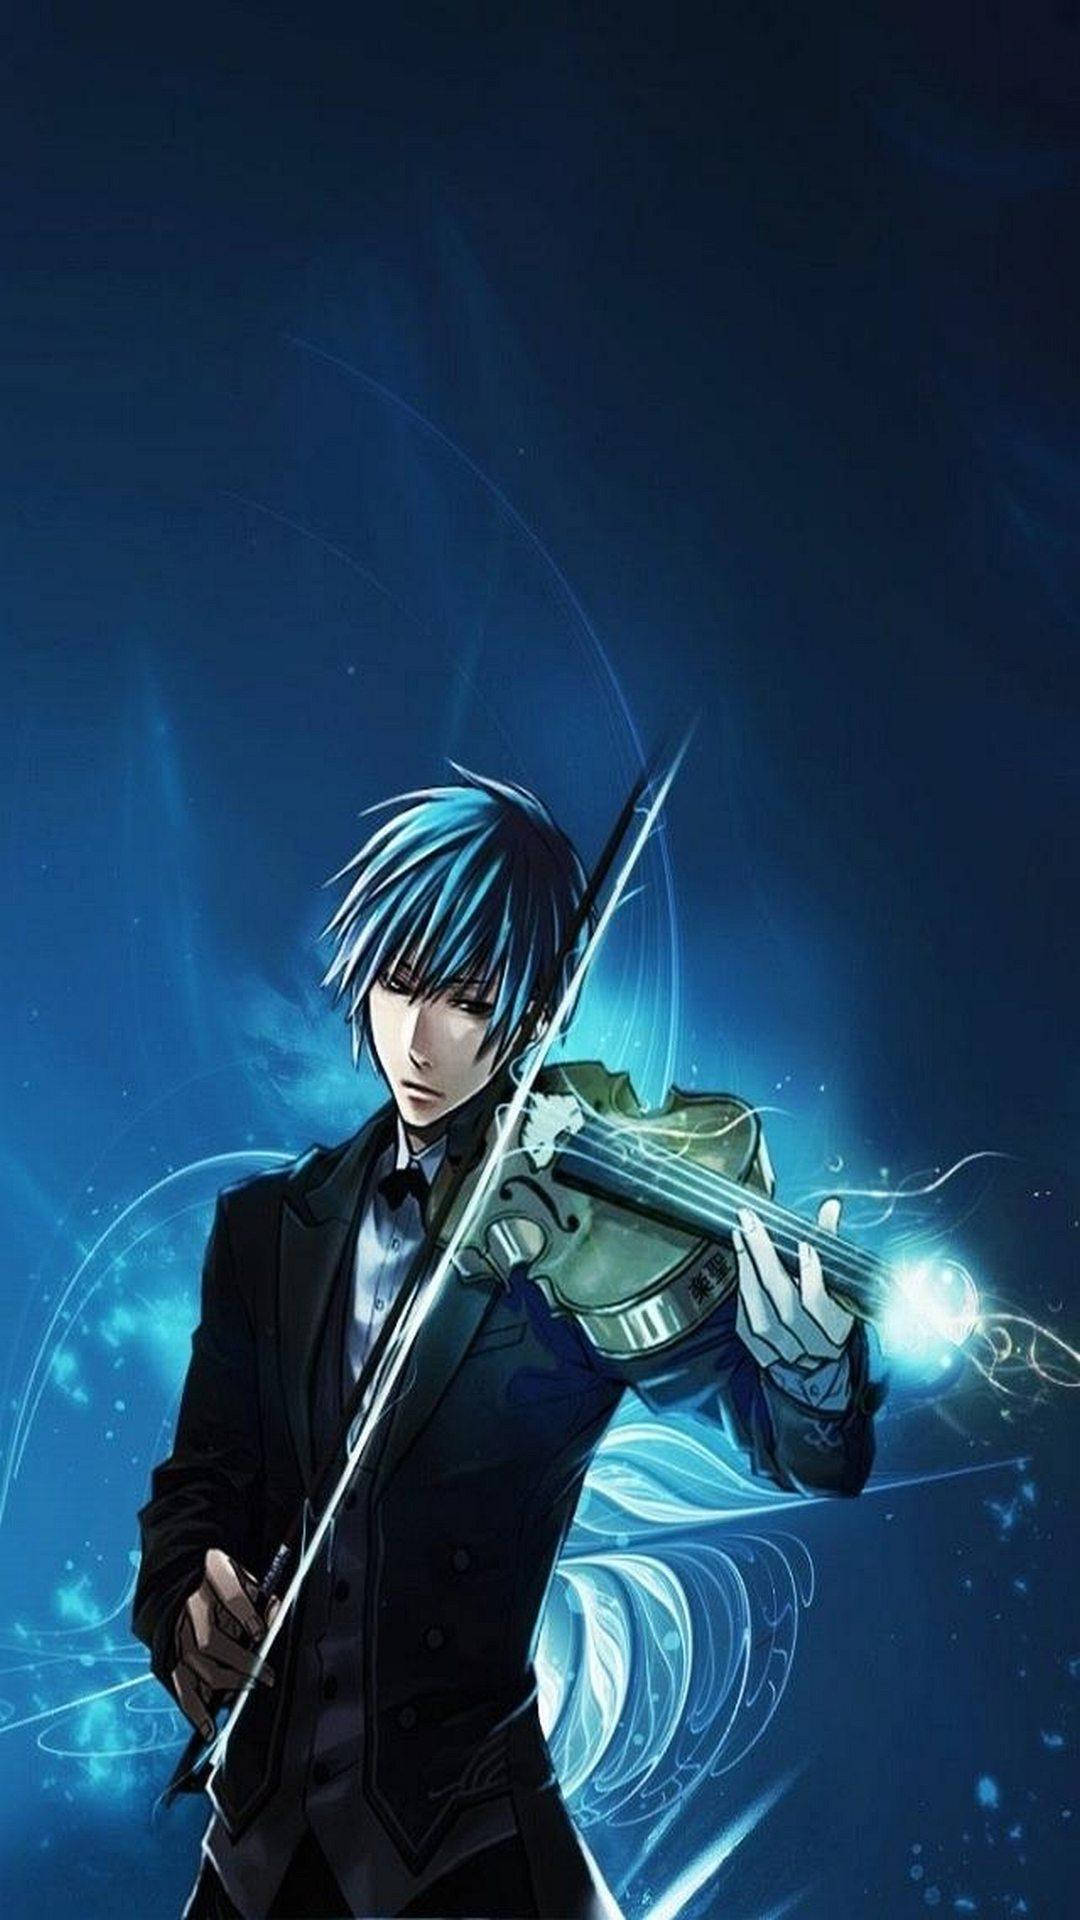 1080p Hd Anime Boy Playing Violin Background